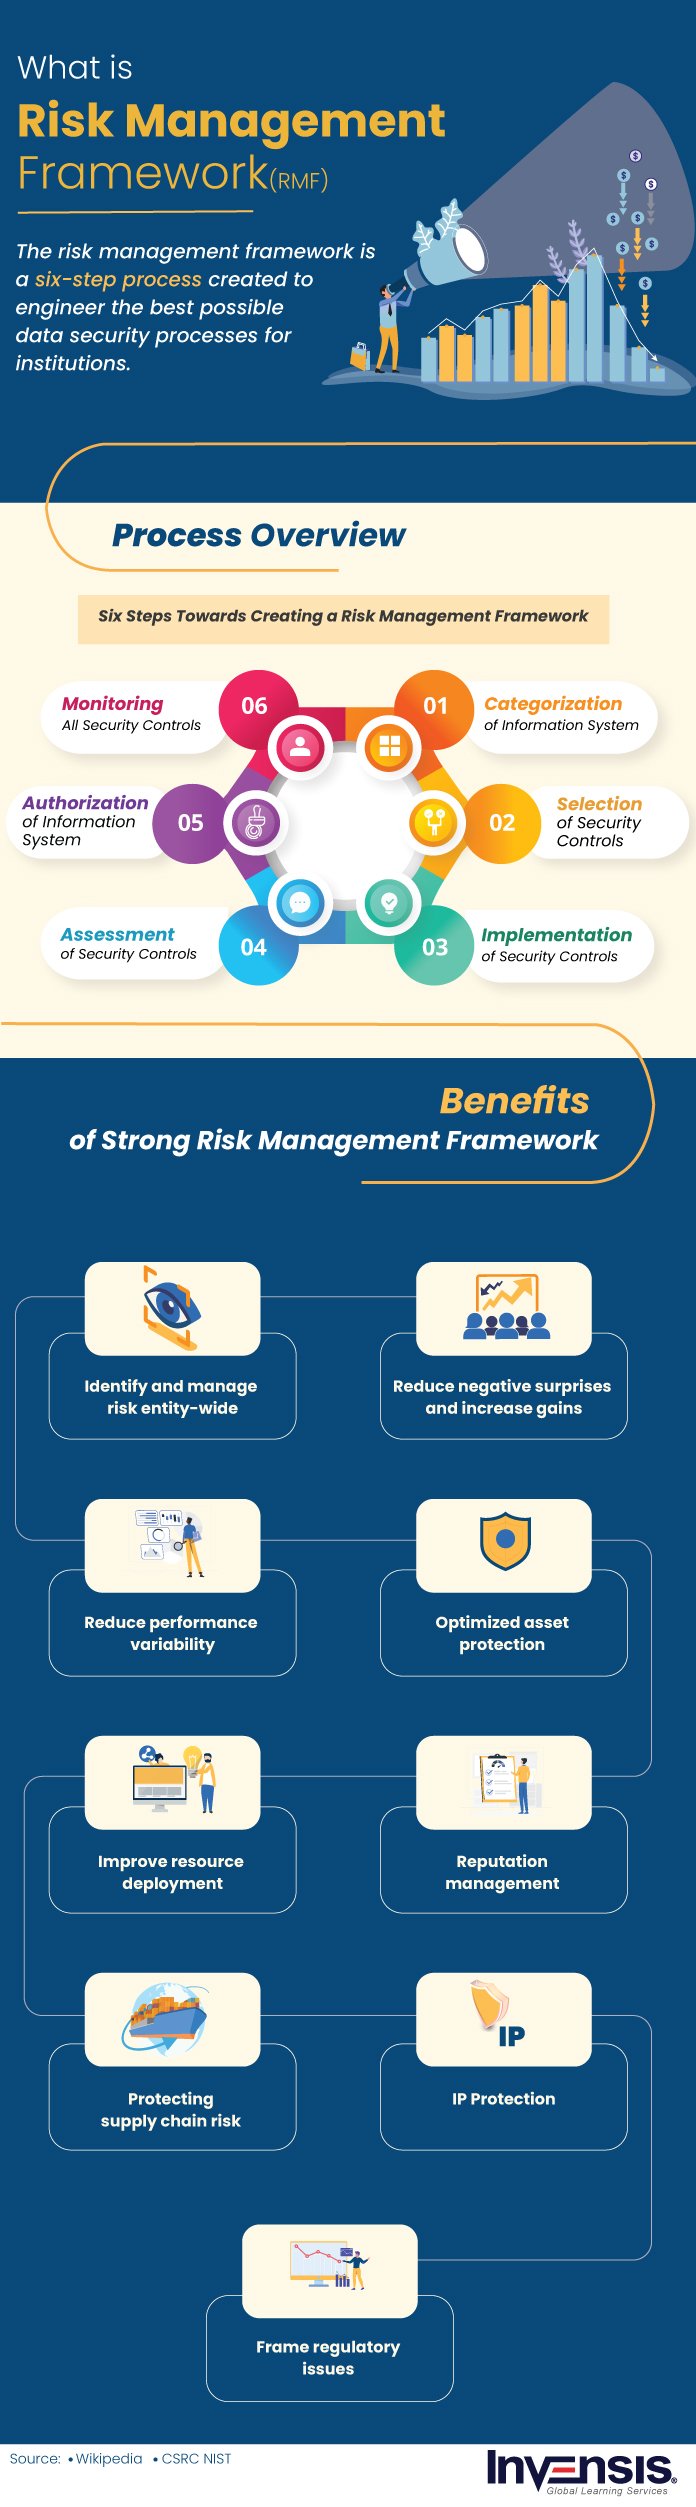 Risk Management Framework (RMF)